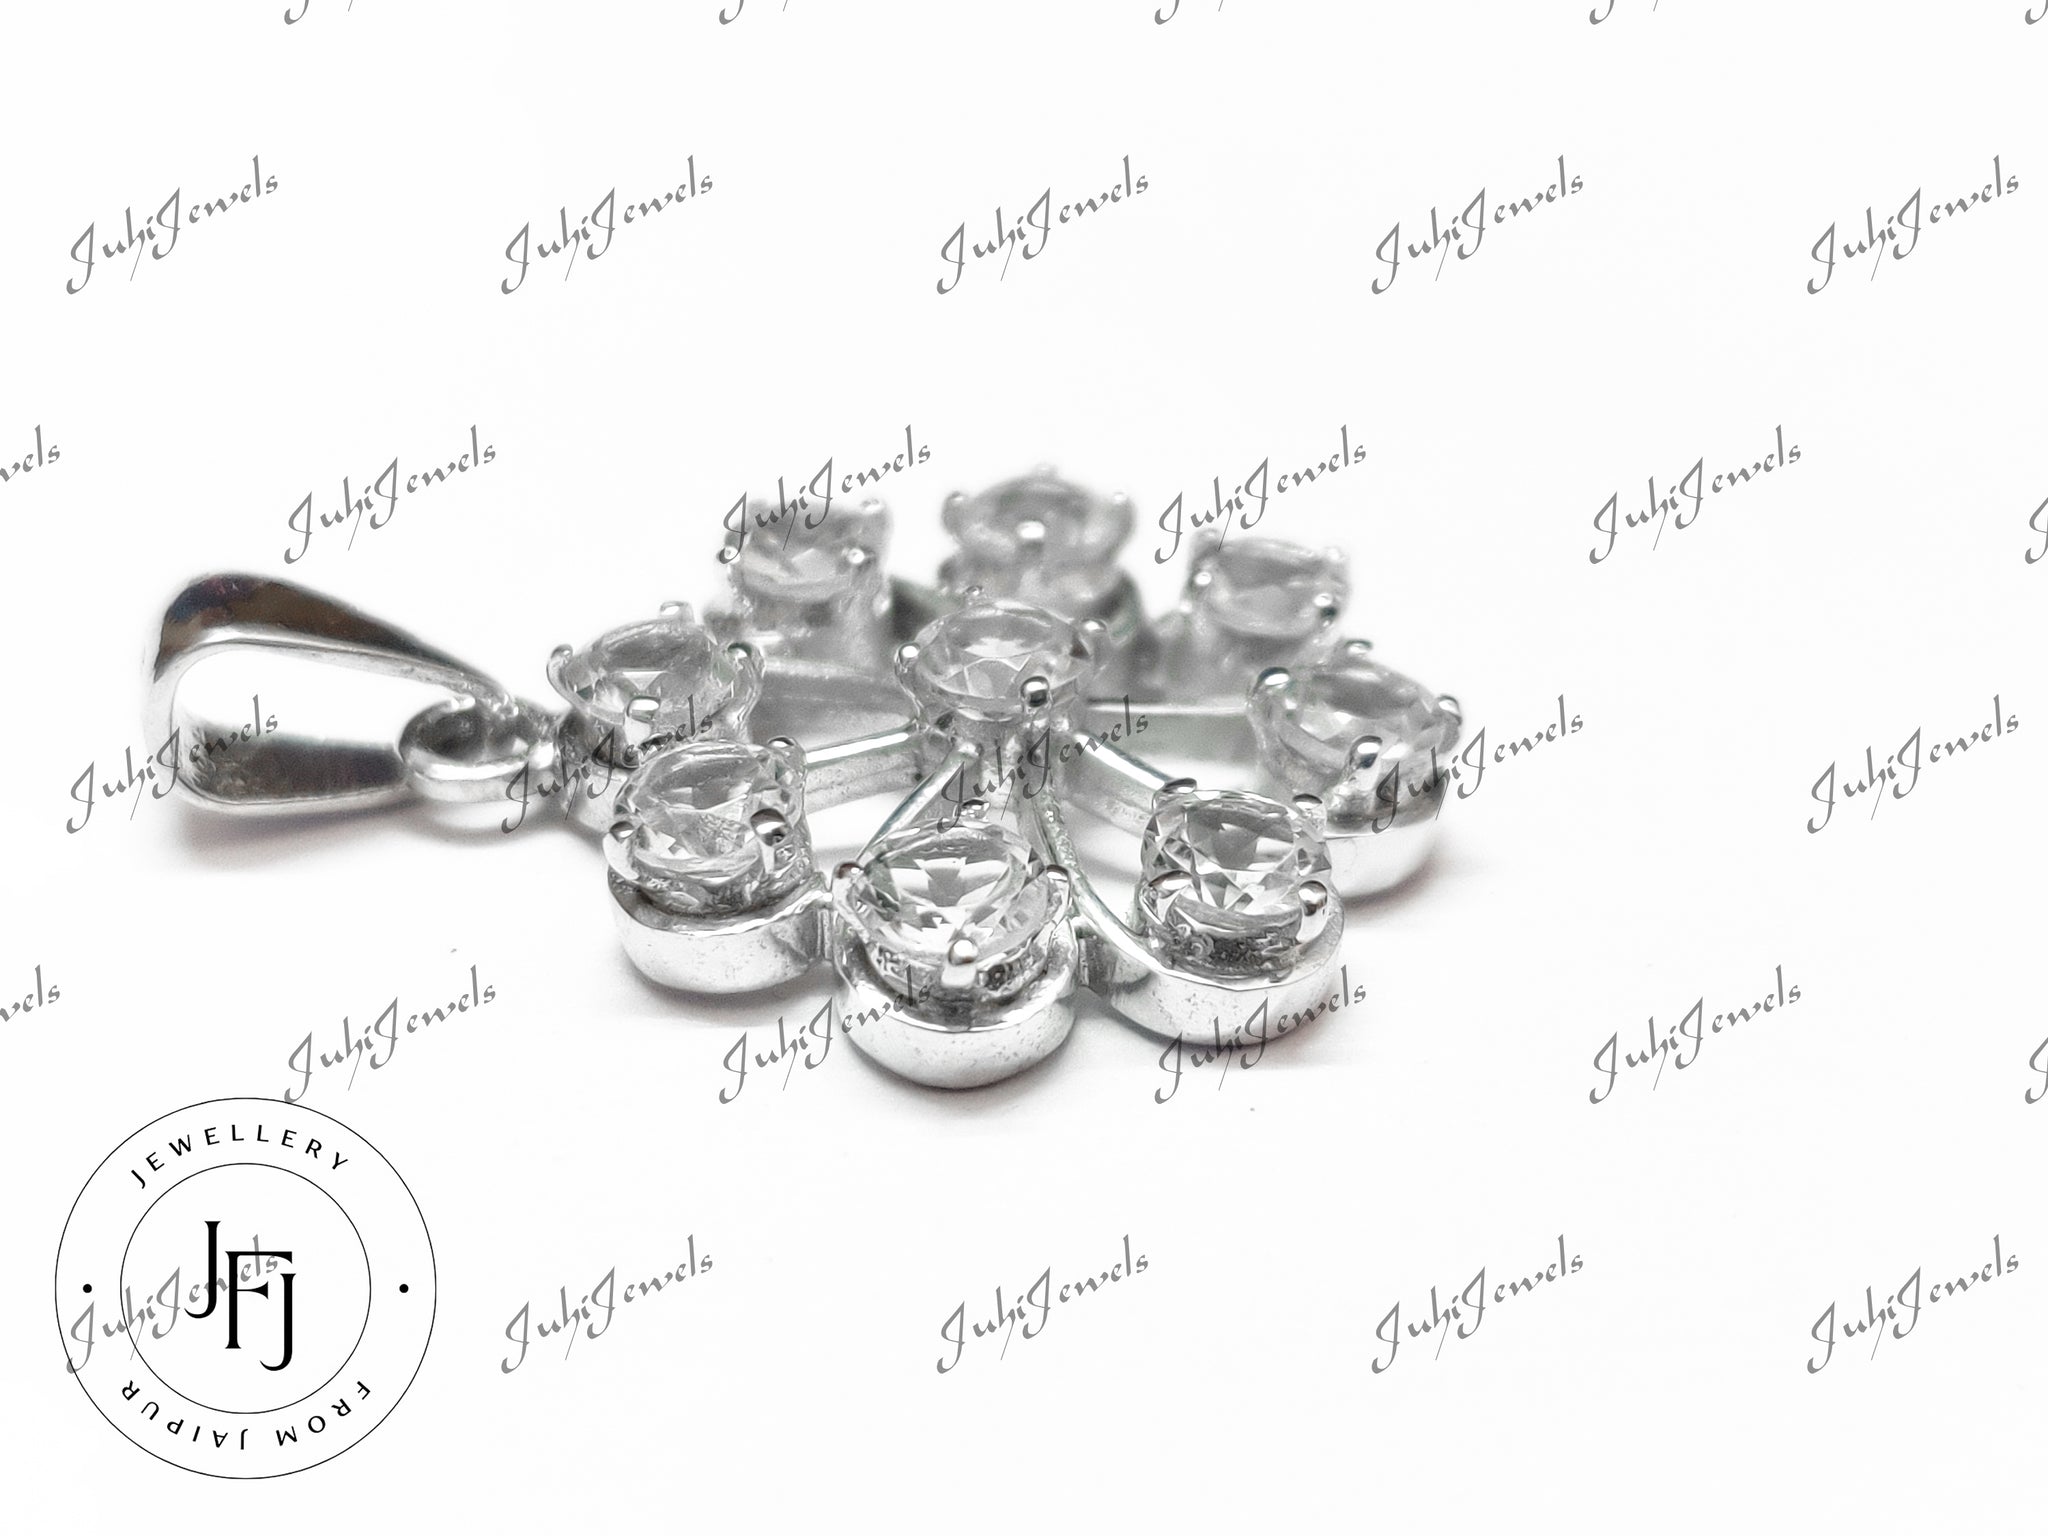 Silver White Topaz Pendant High Quality 4 Ct Natural White Topaz Pendant Flower Topaz Pendant 925 Sterling Silver Topaz Jewelry